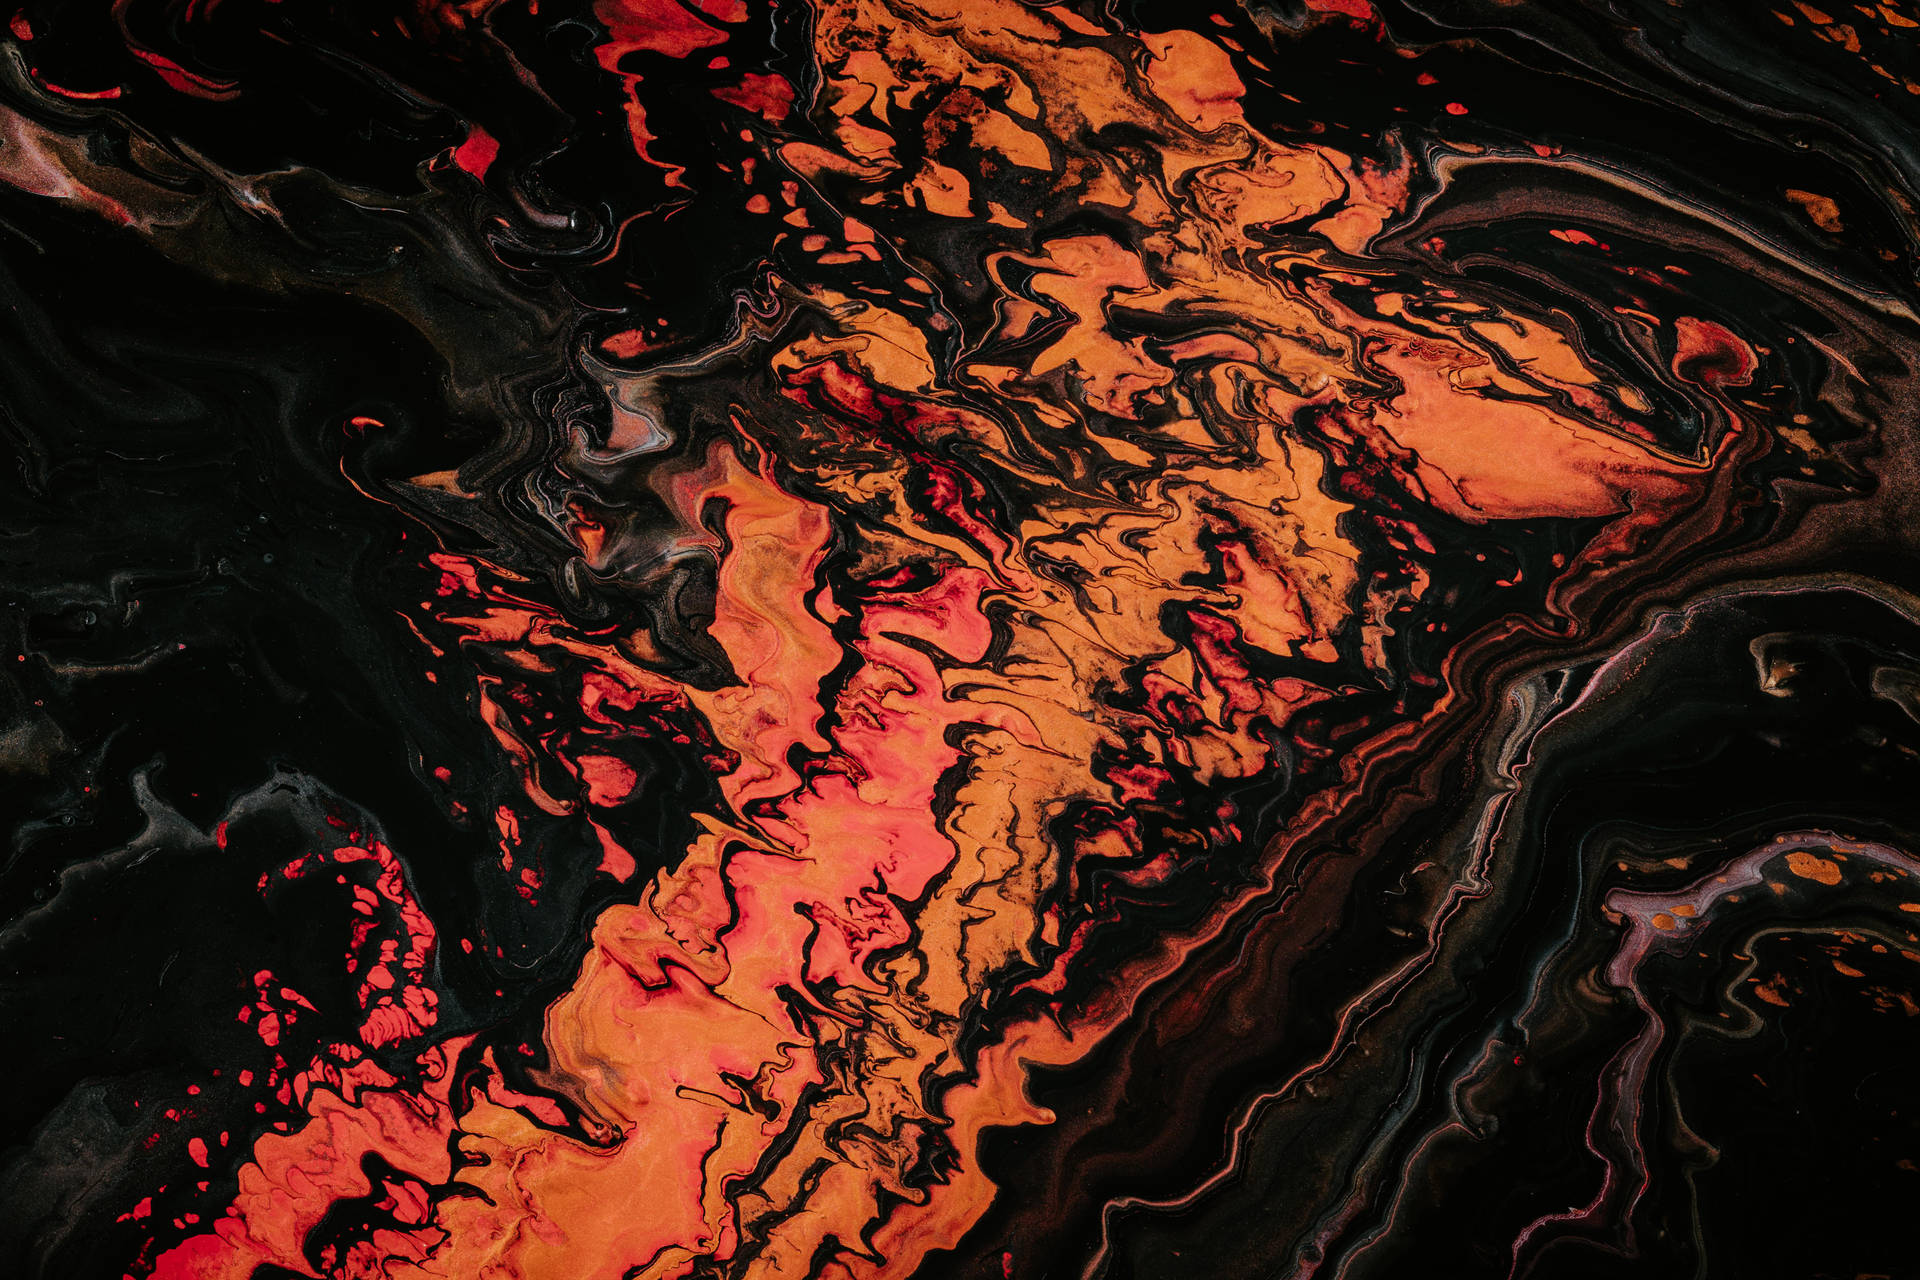 Organic Fluid Curving Dark Abstract Wallpaper